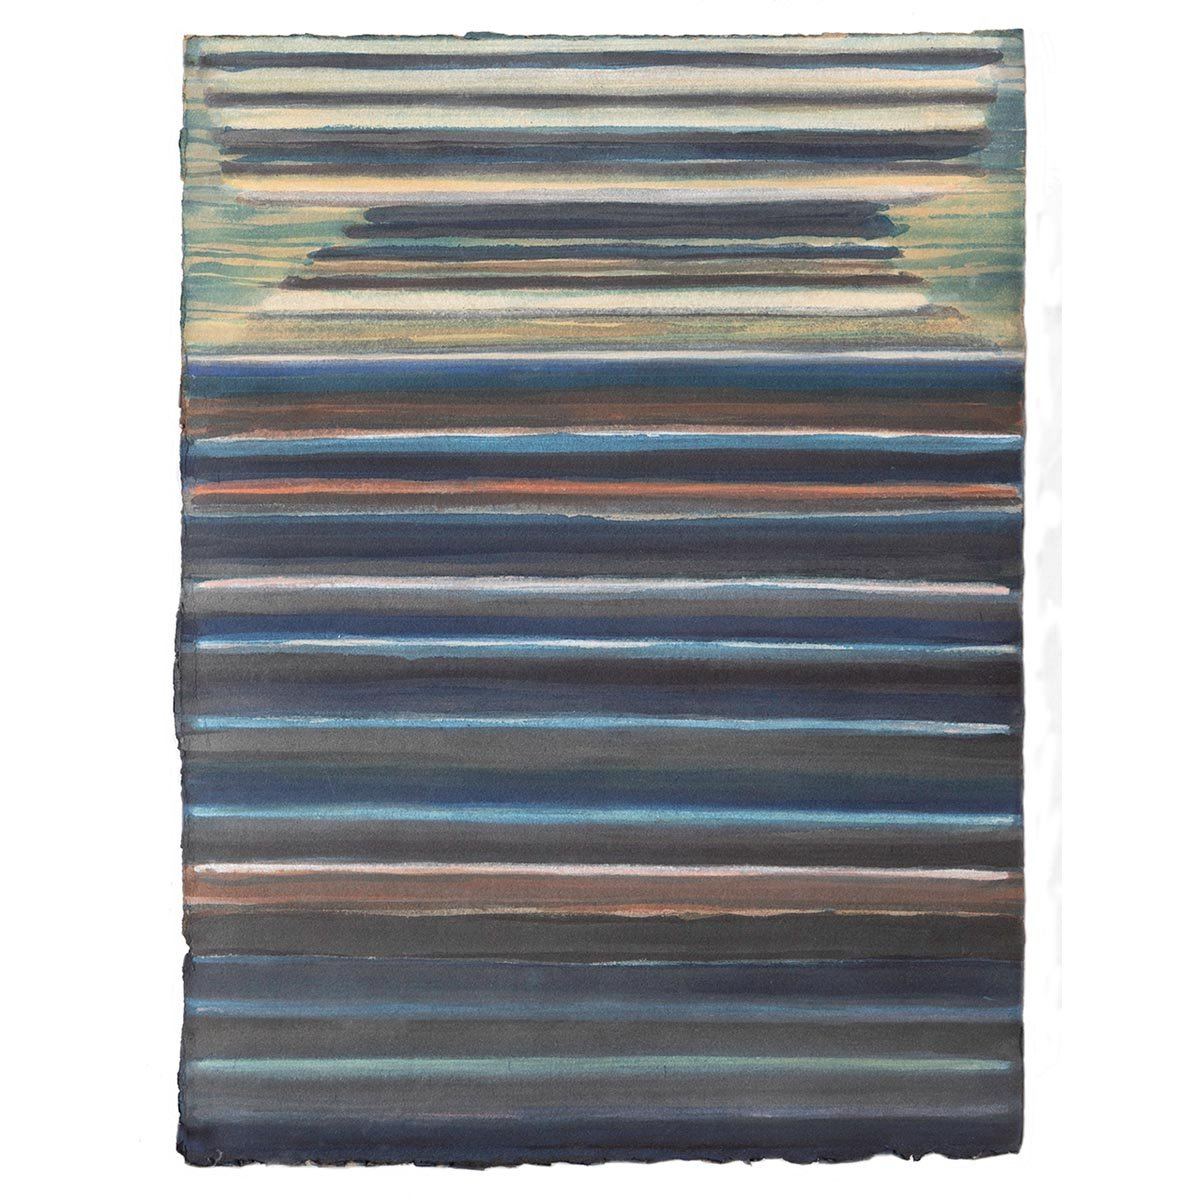 Ocean Stripes One Michelle Hauser